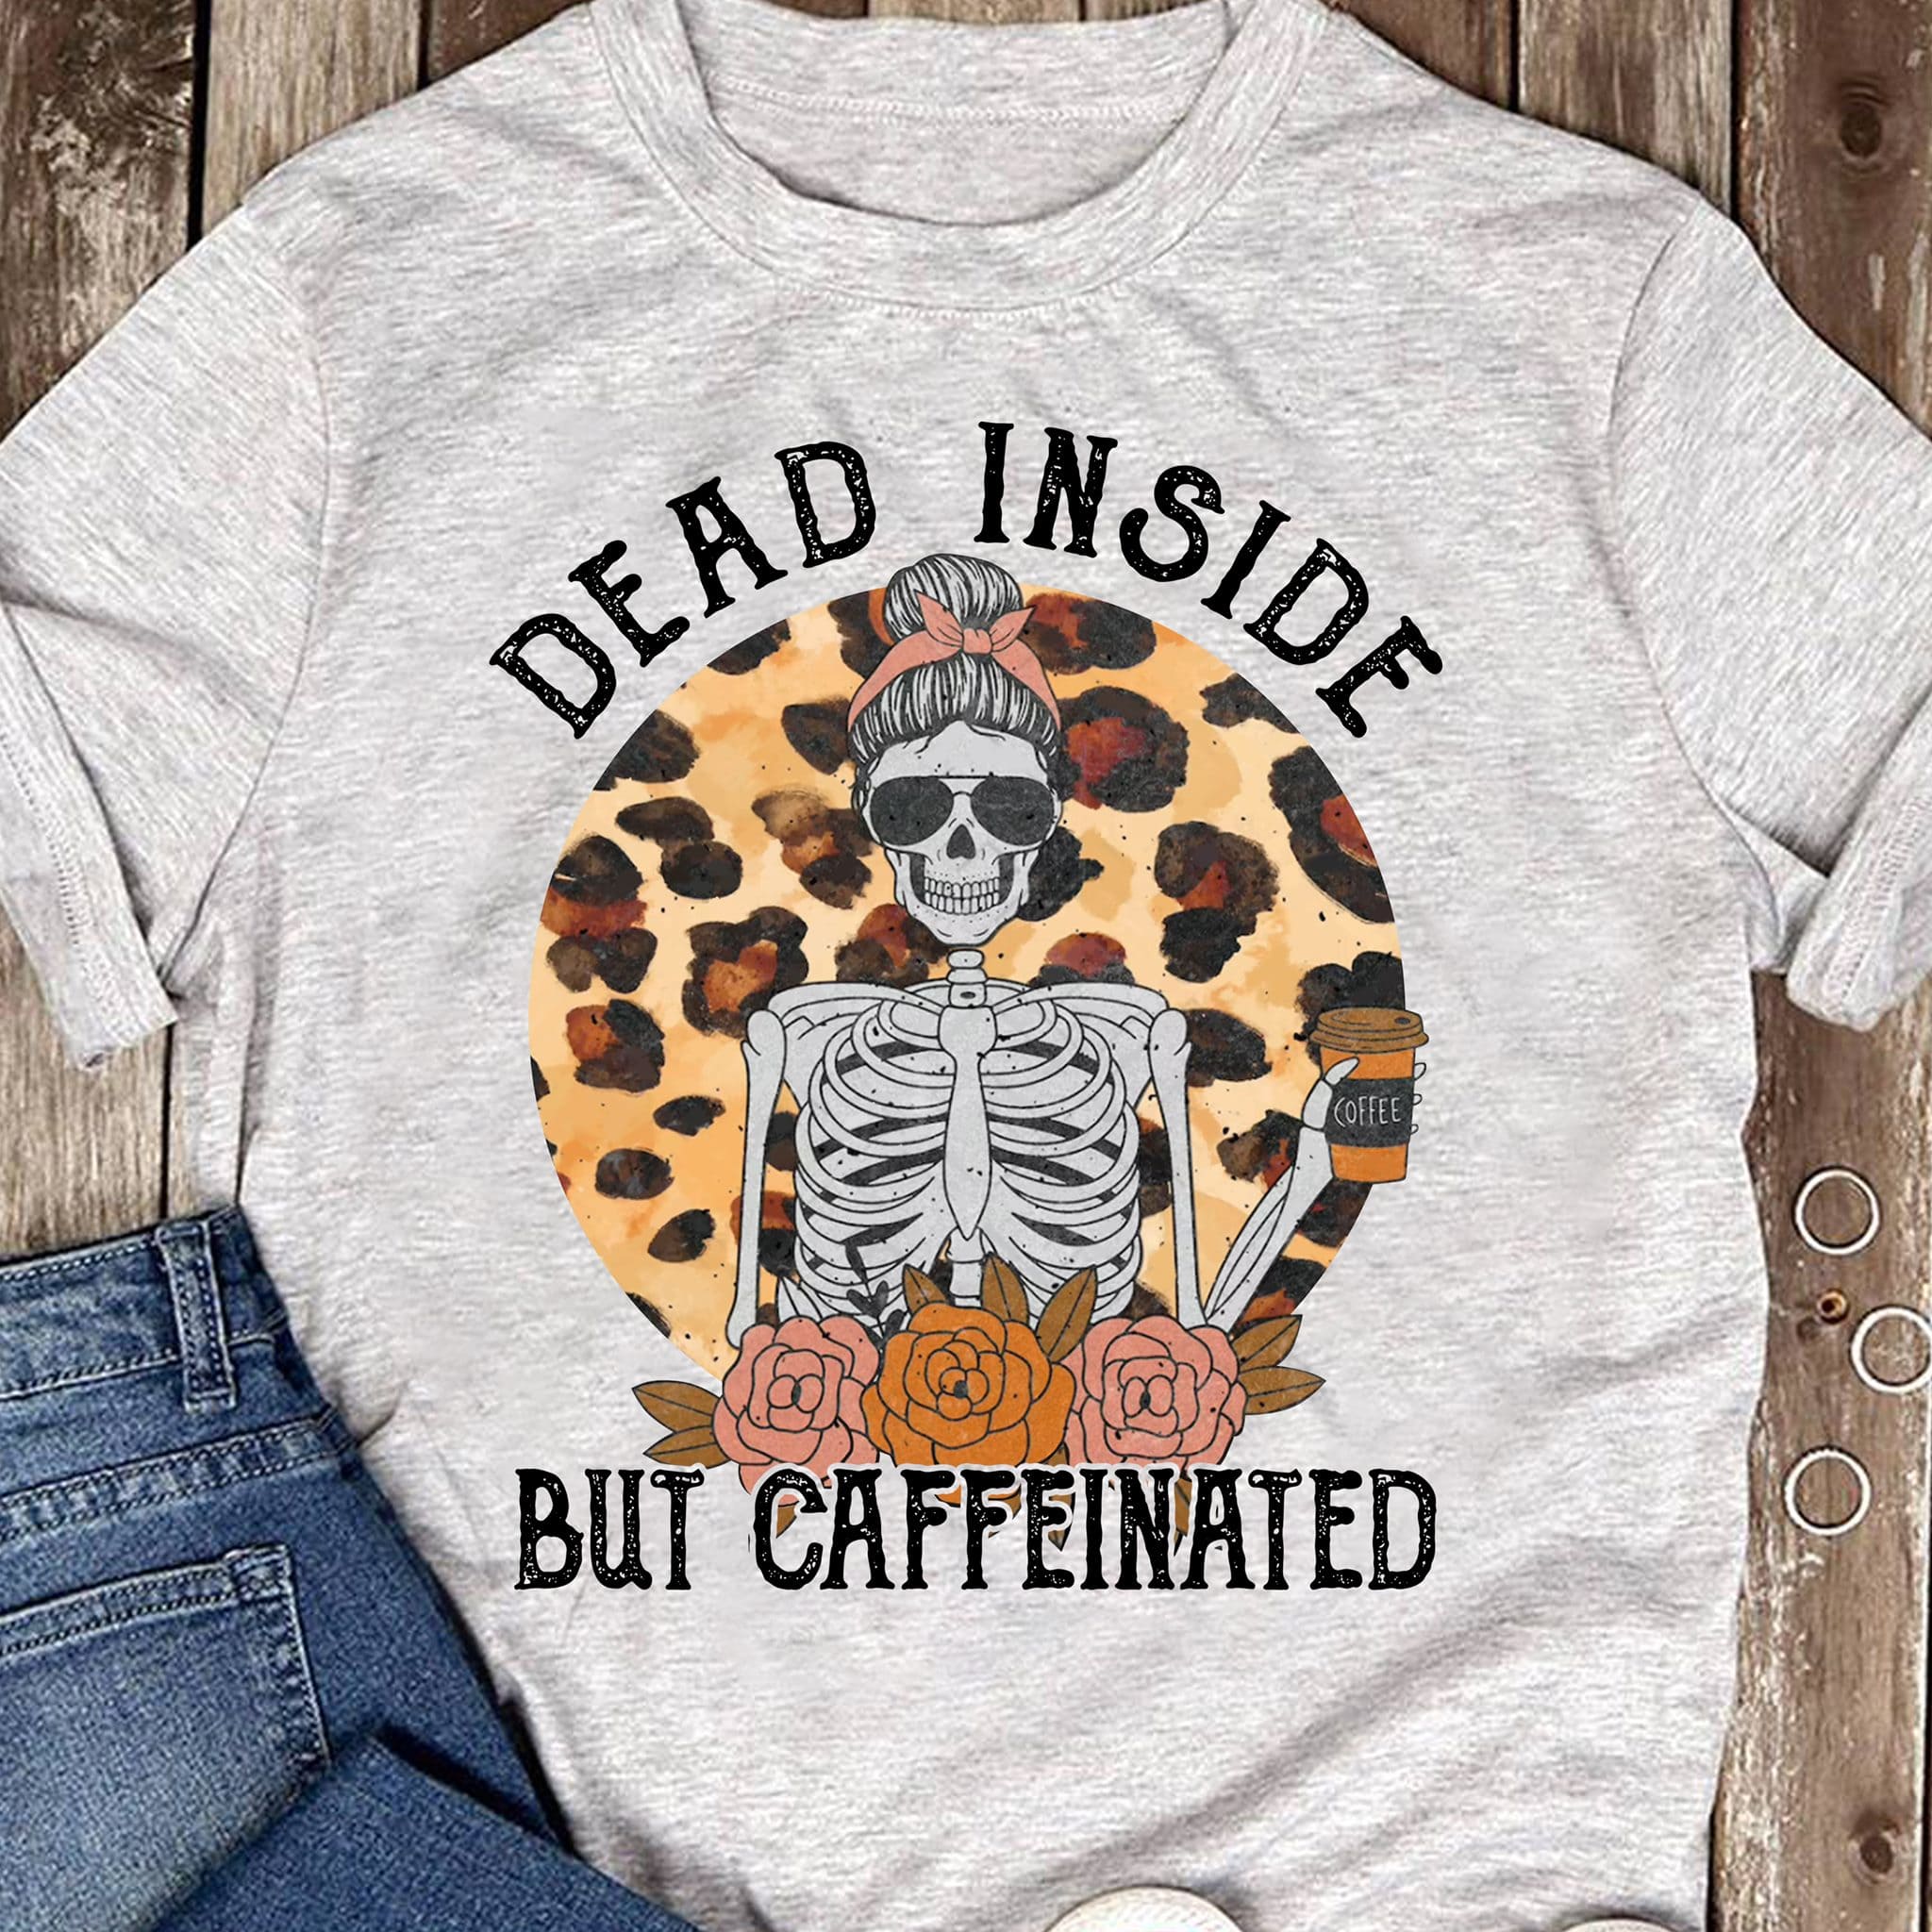 Dead inside but caffeinated - Caffein addicted people, Skull drinking coffee